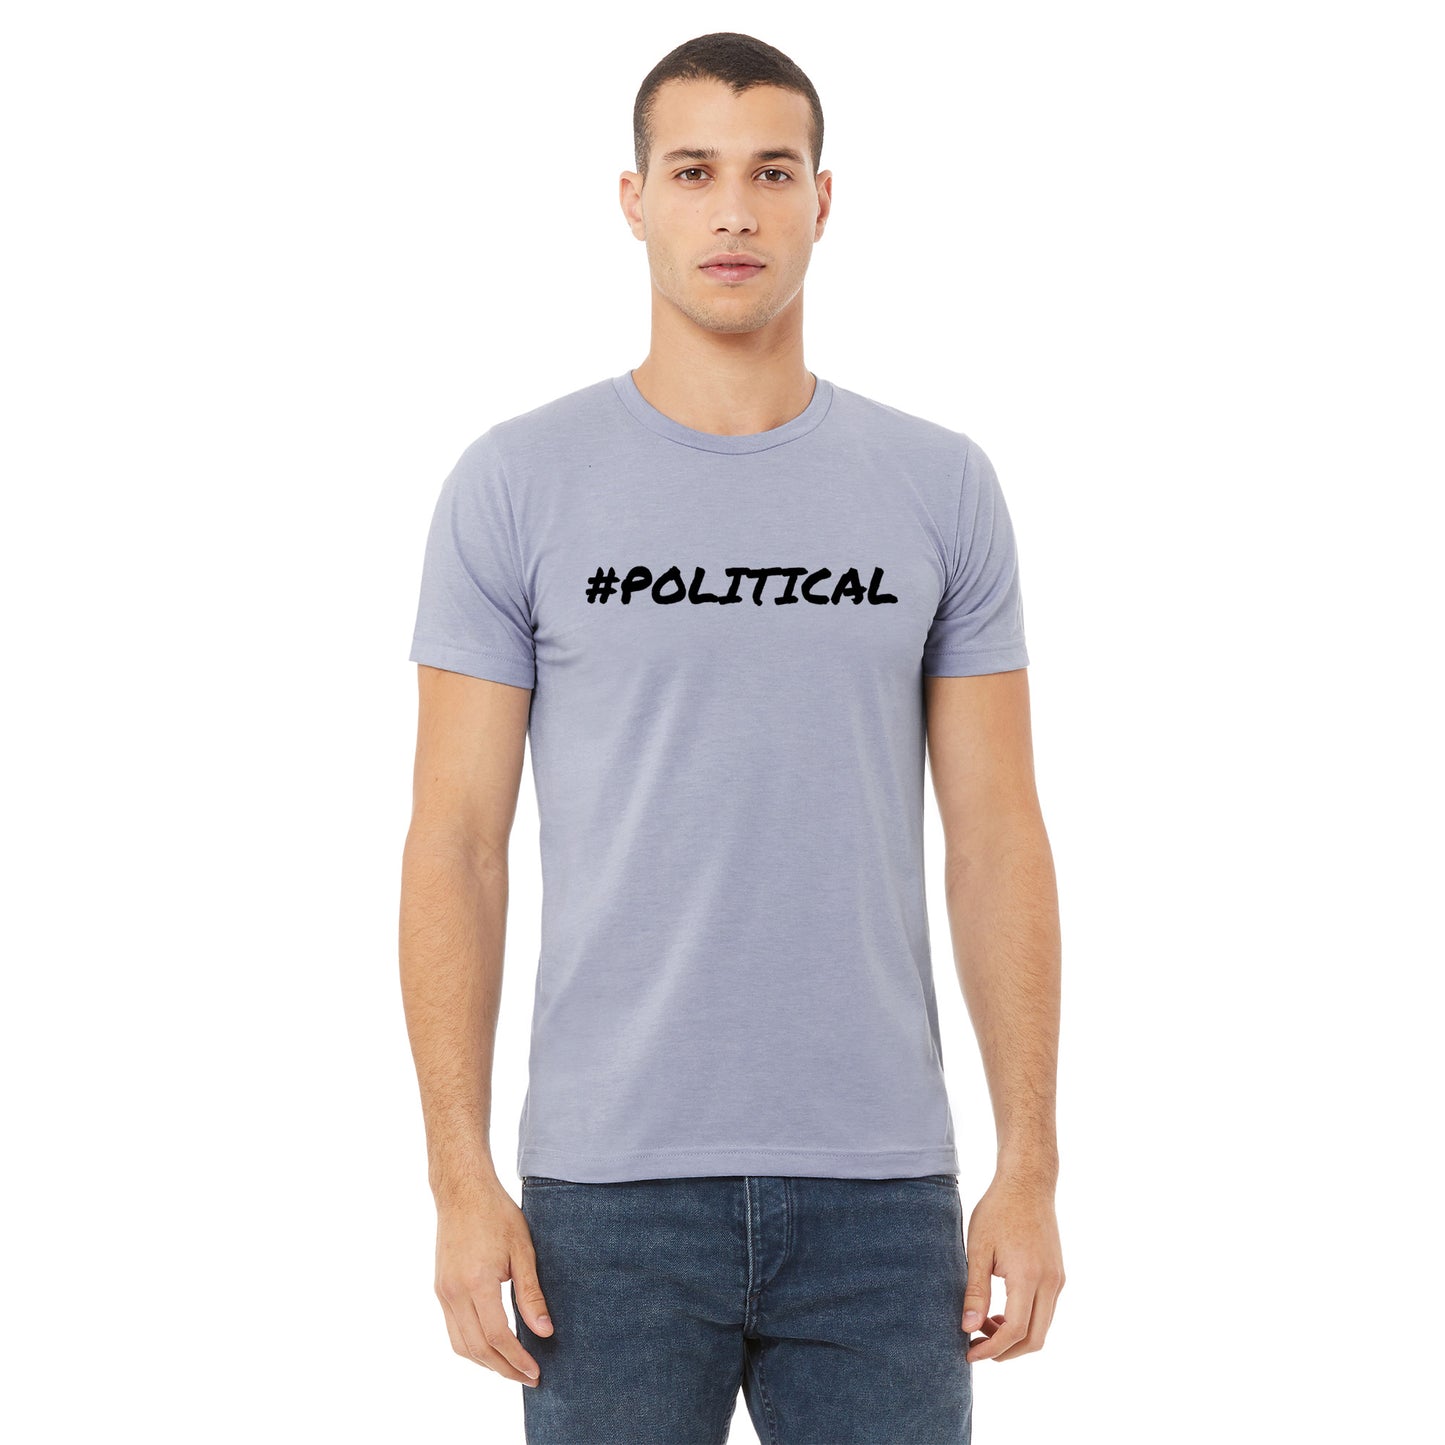 Political - Unisex T-Shirt